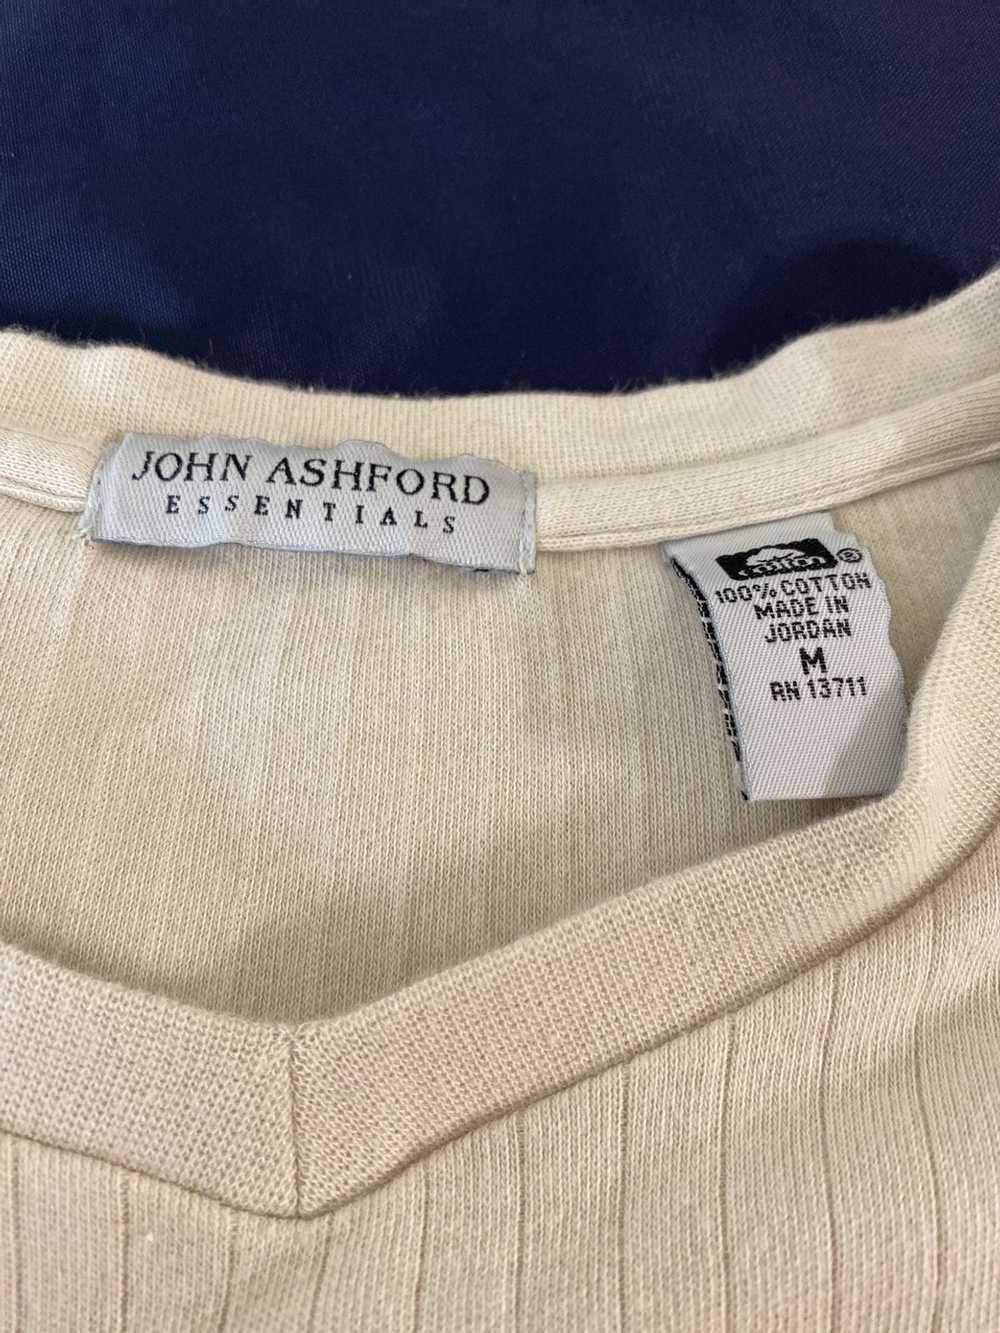 John Ashford John ashford essentials off white co… - image 2